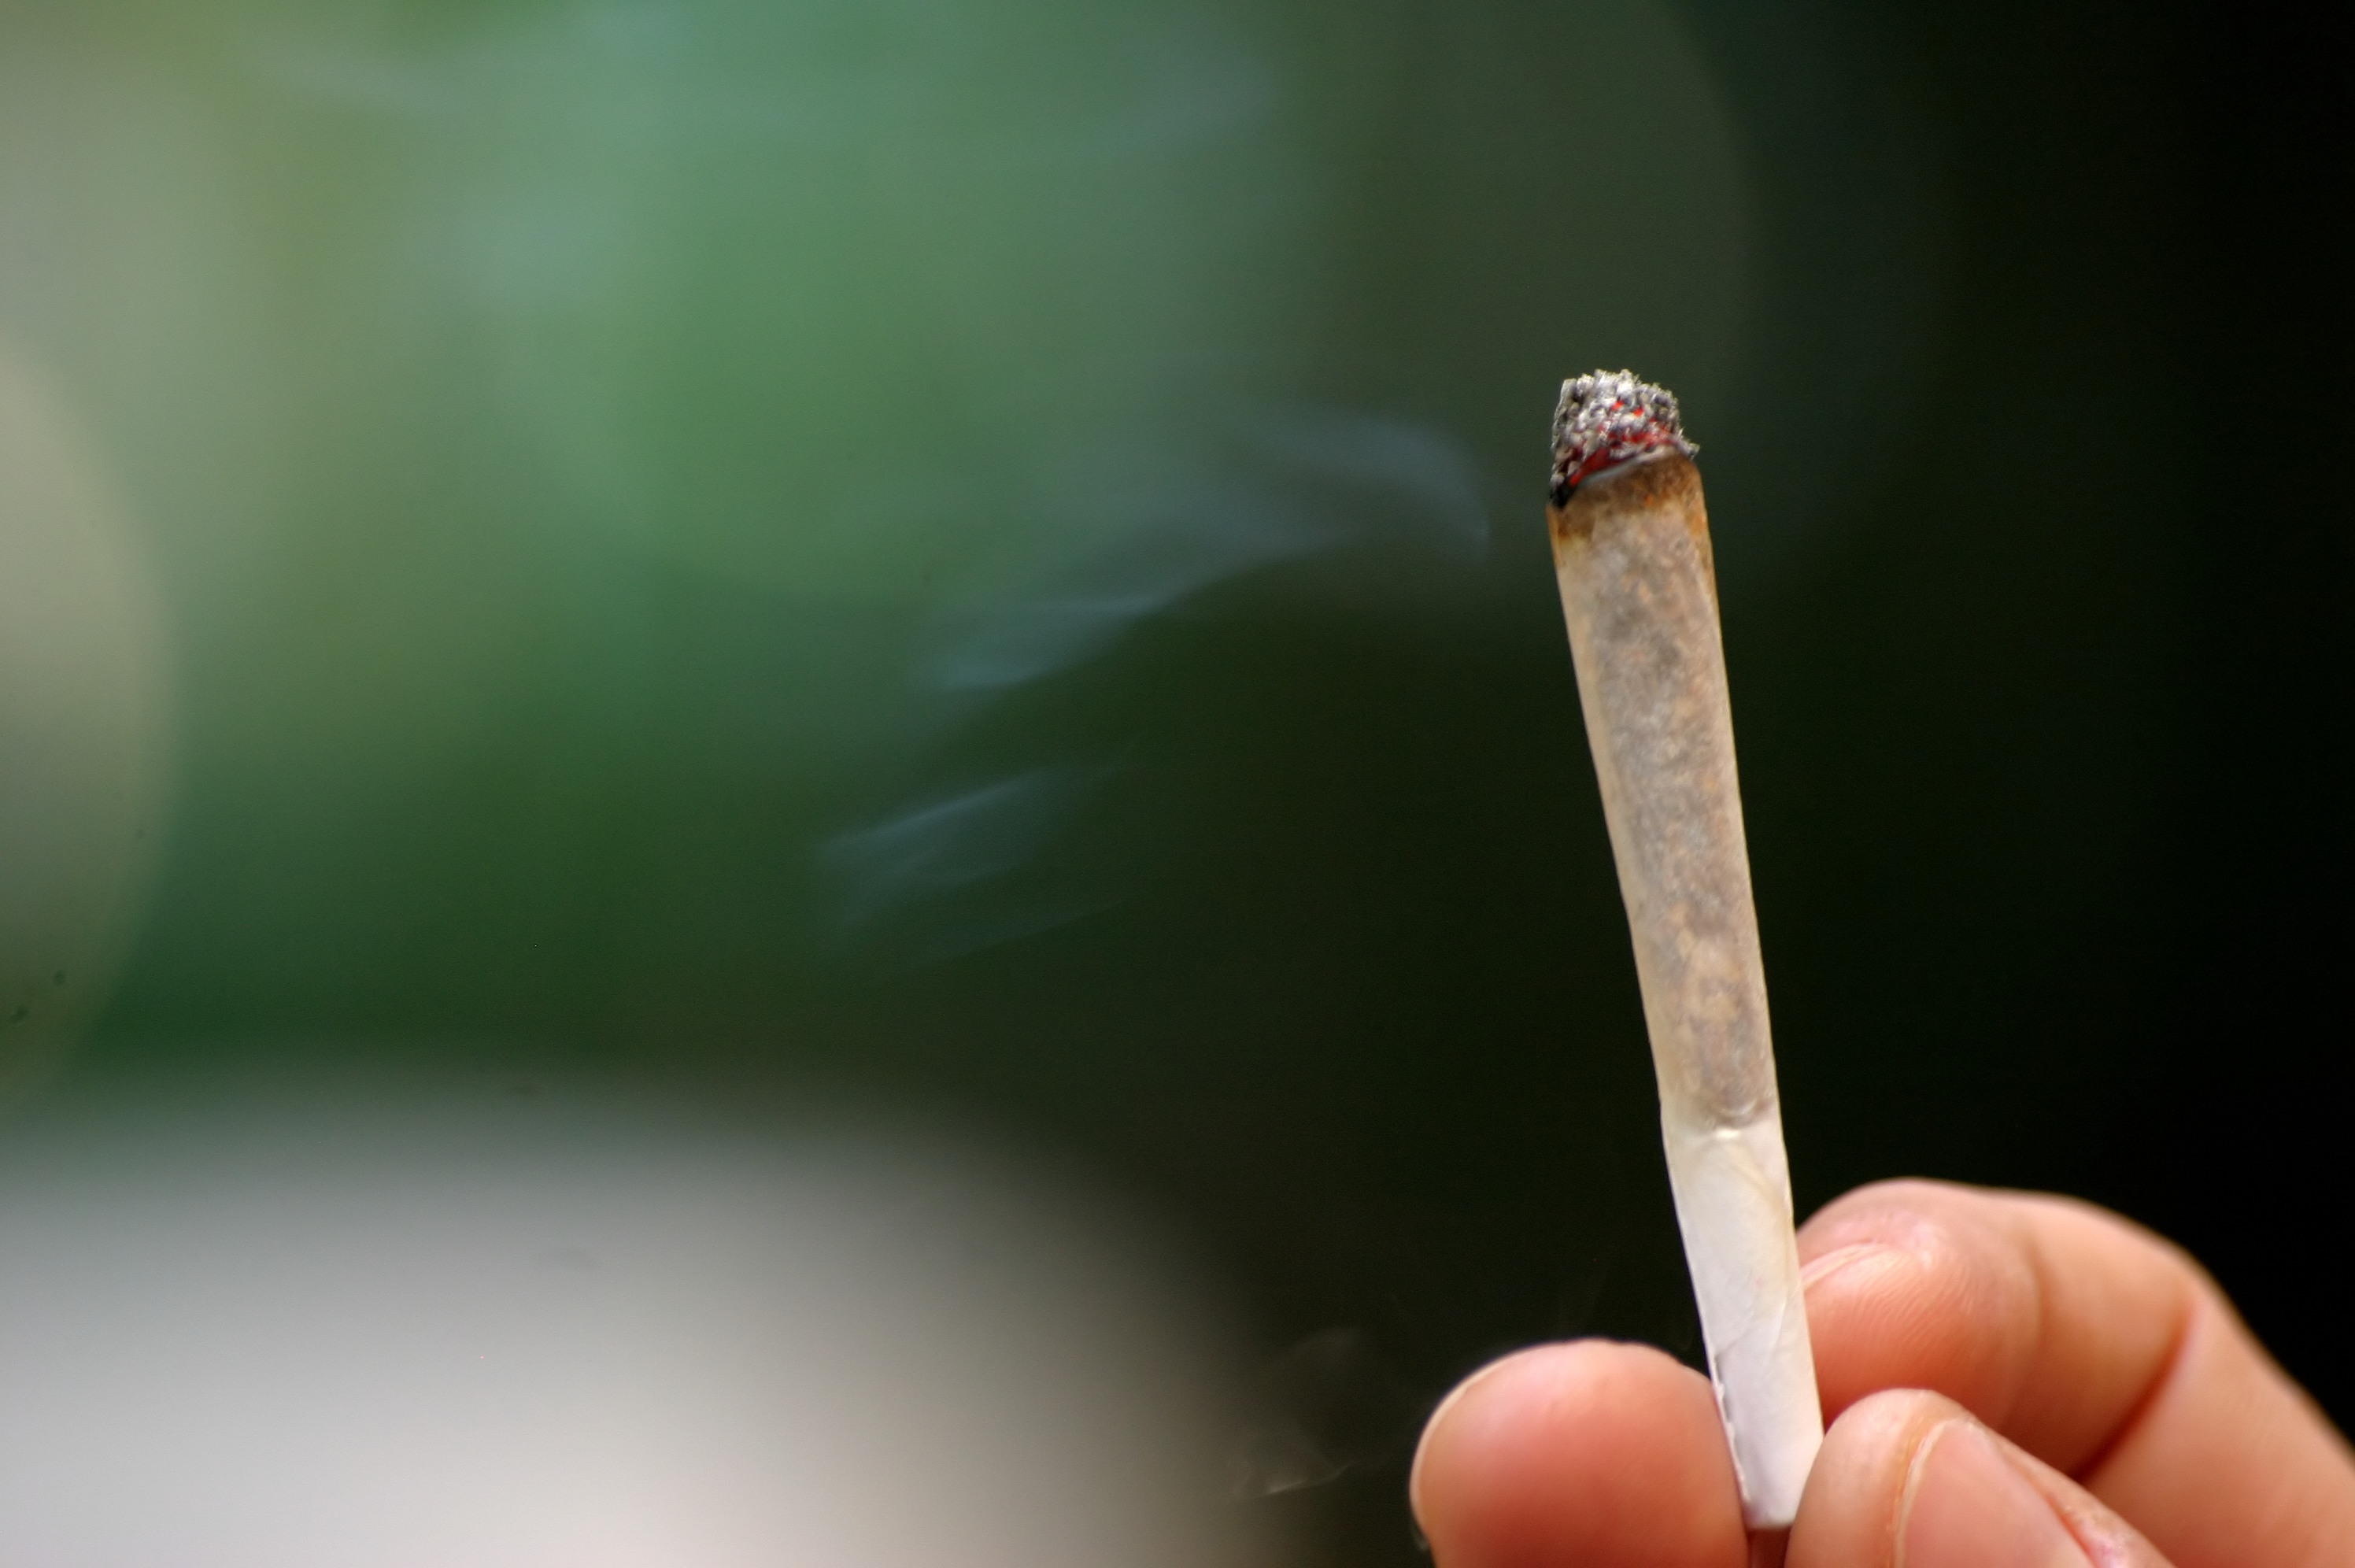 cannabis, joint, gros plan sur le joint